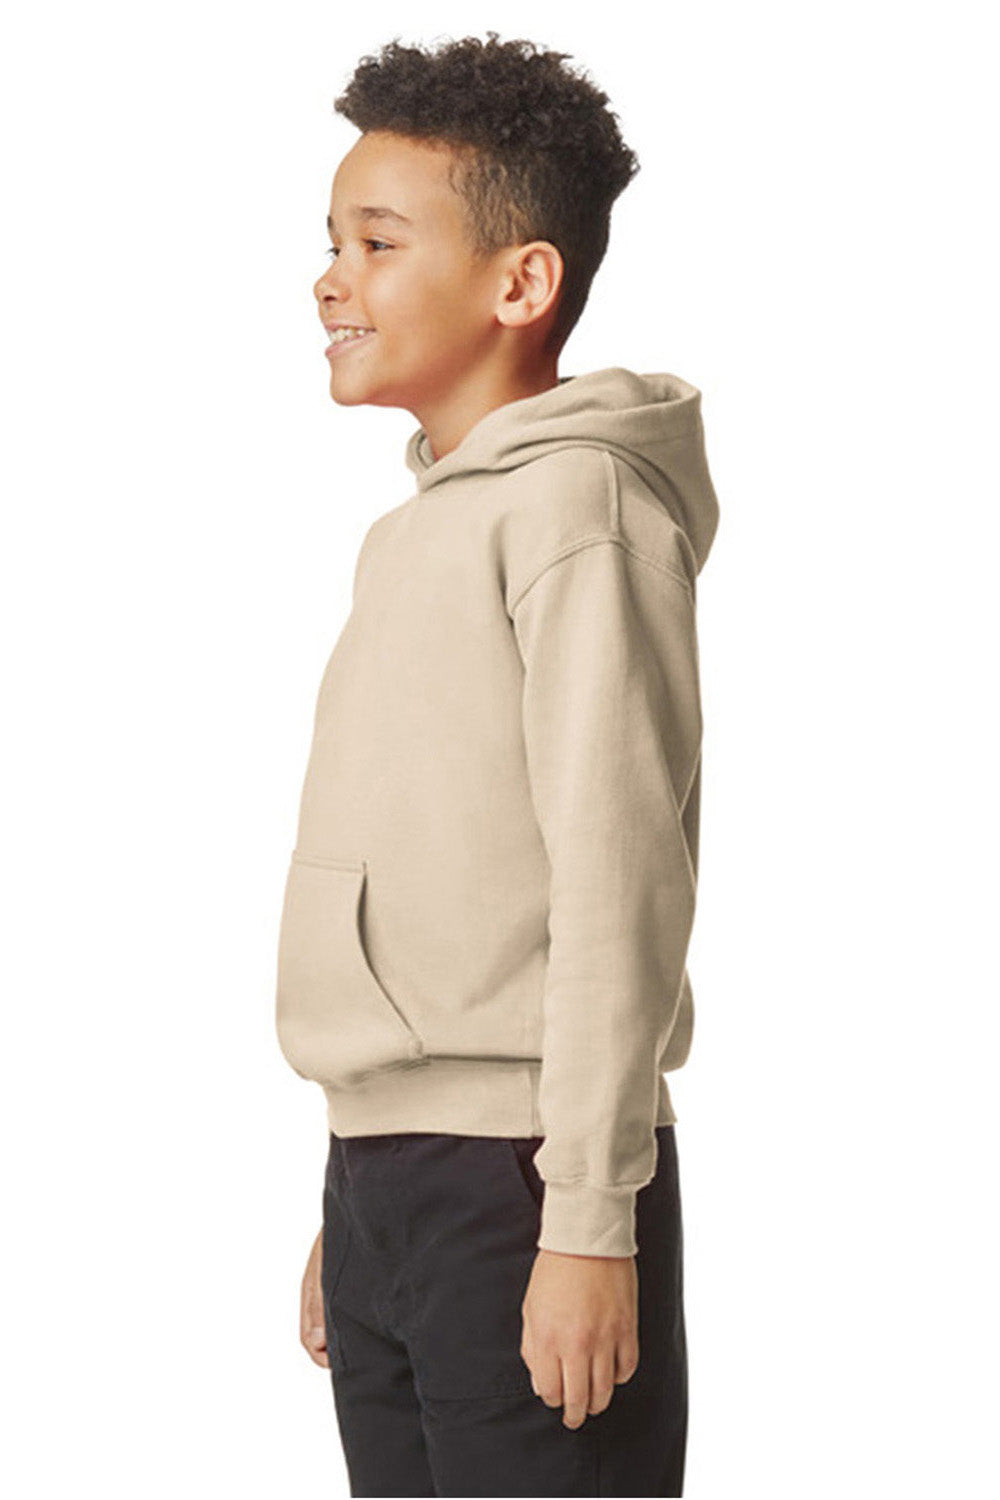 Gildan SF500B Youth Softstyle Hooded Sweatshirt Hoodie Sand Model Side